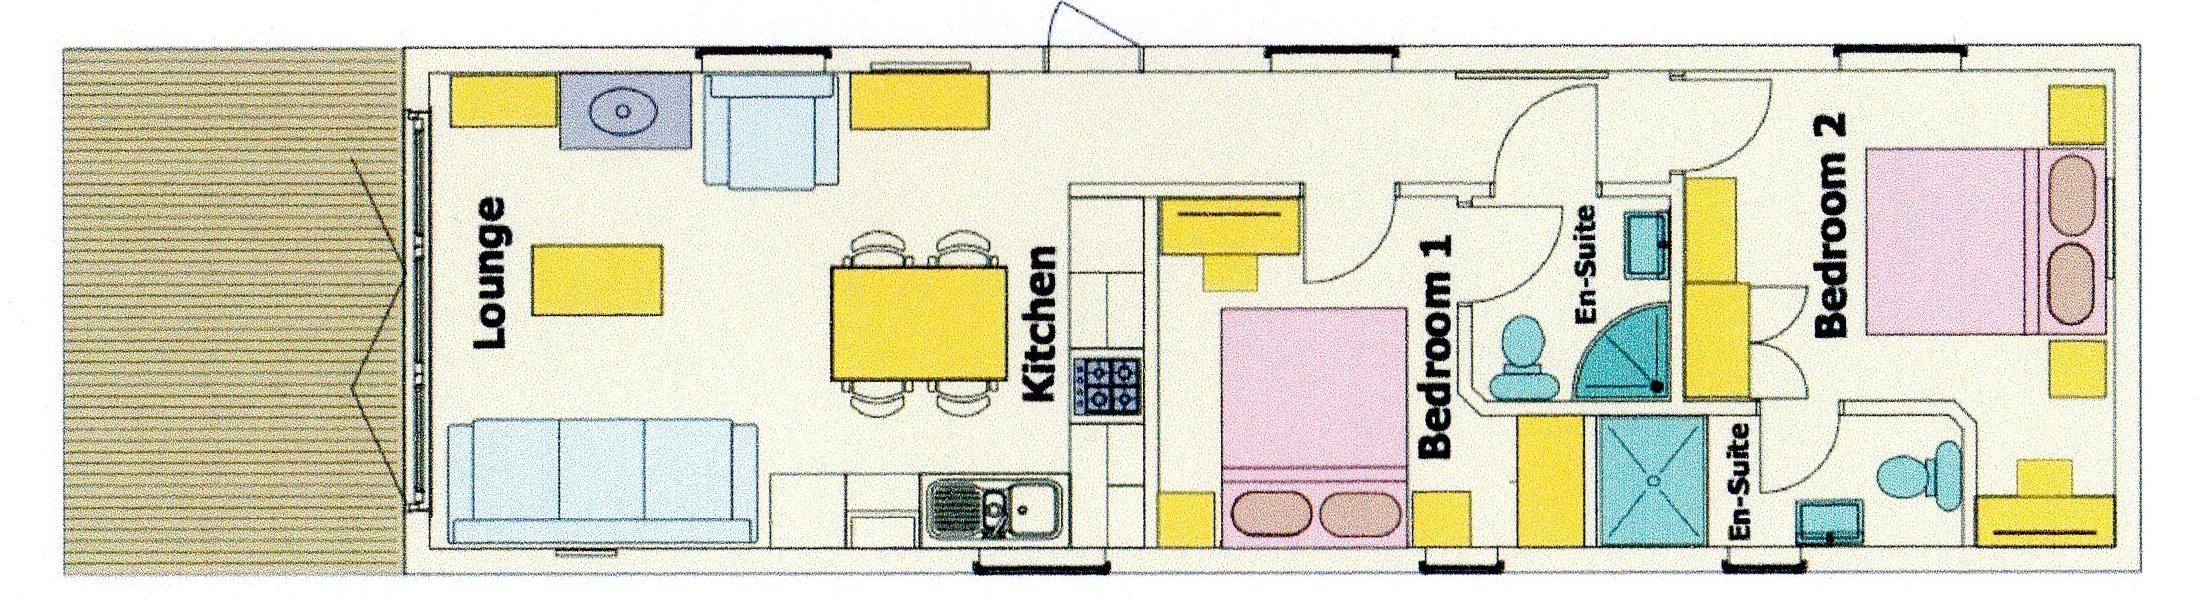 Puffin Lodge Floor Plan